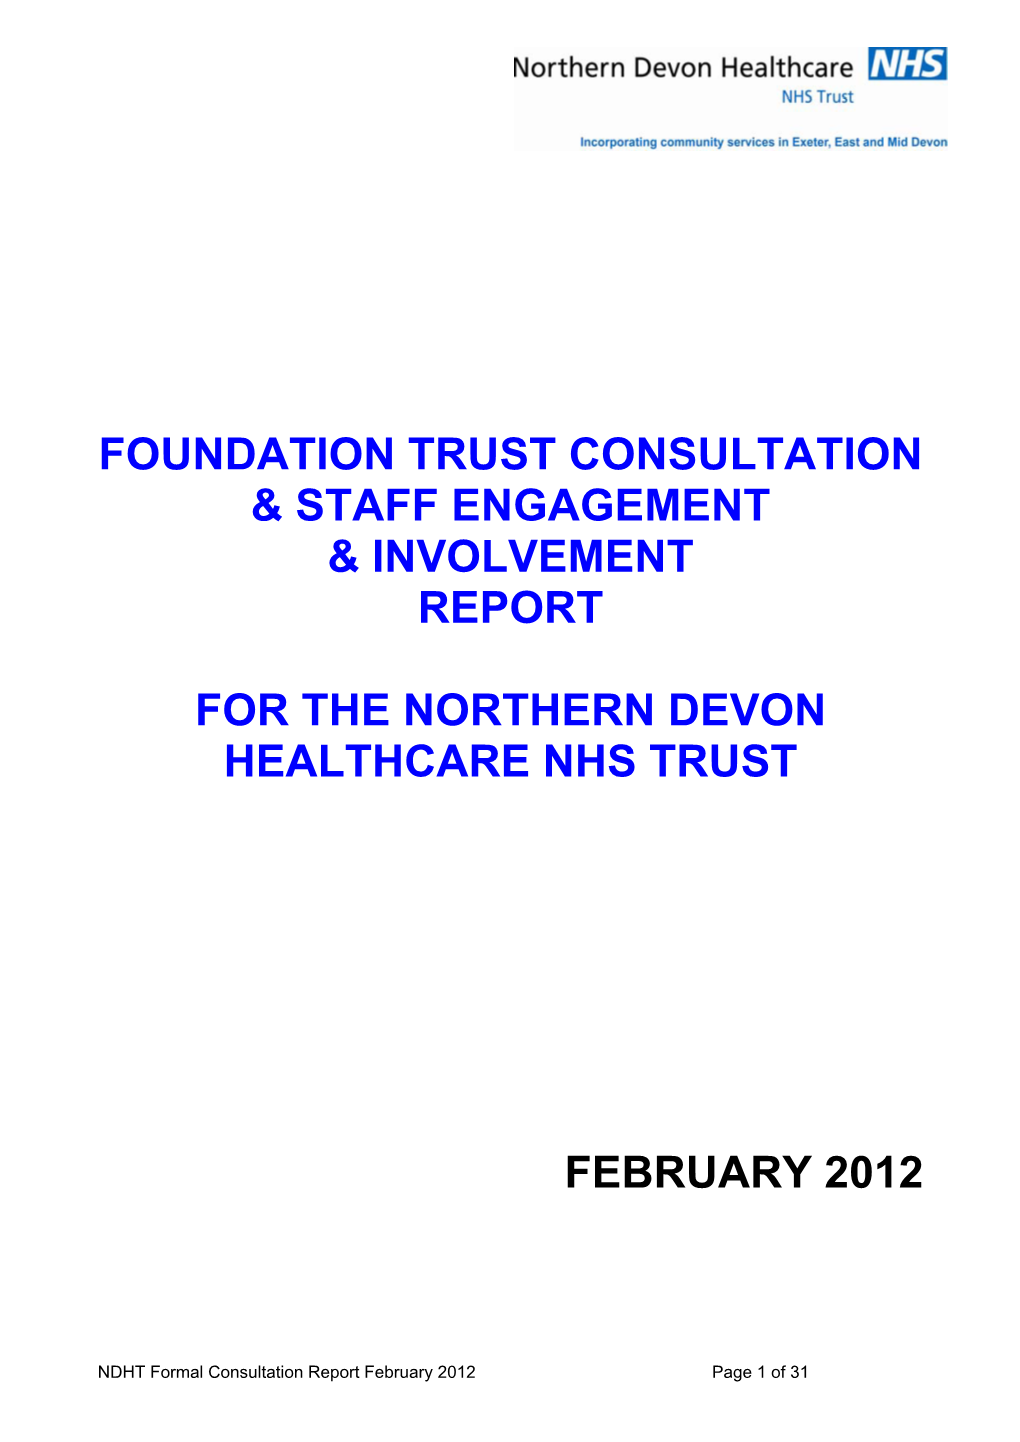 Foundation Trust Consultation & Staff